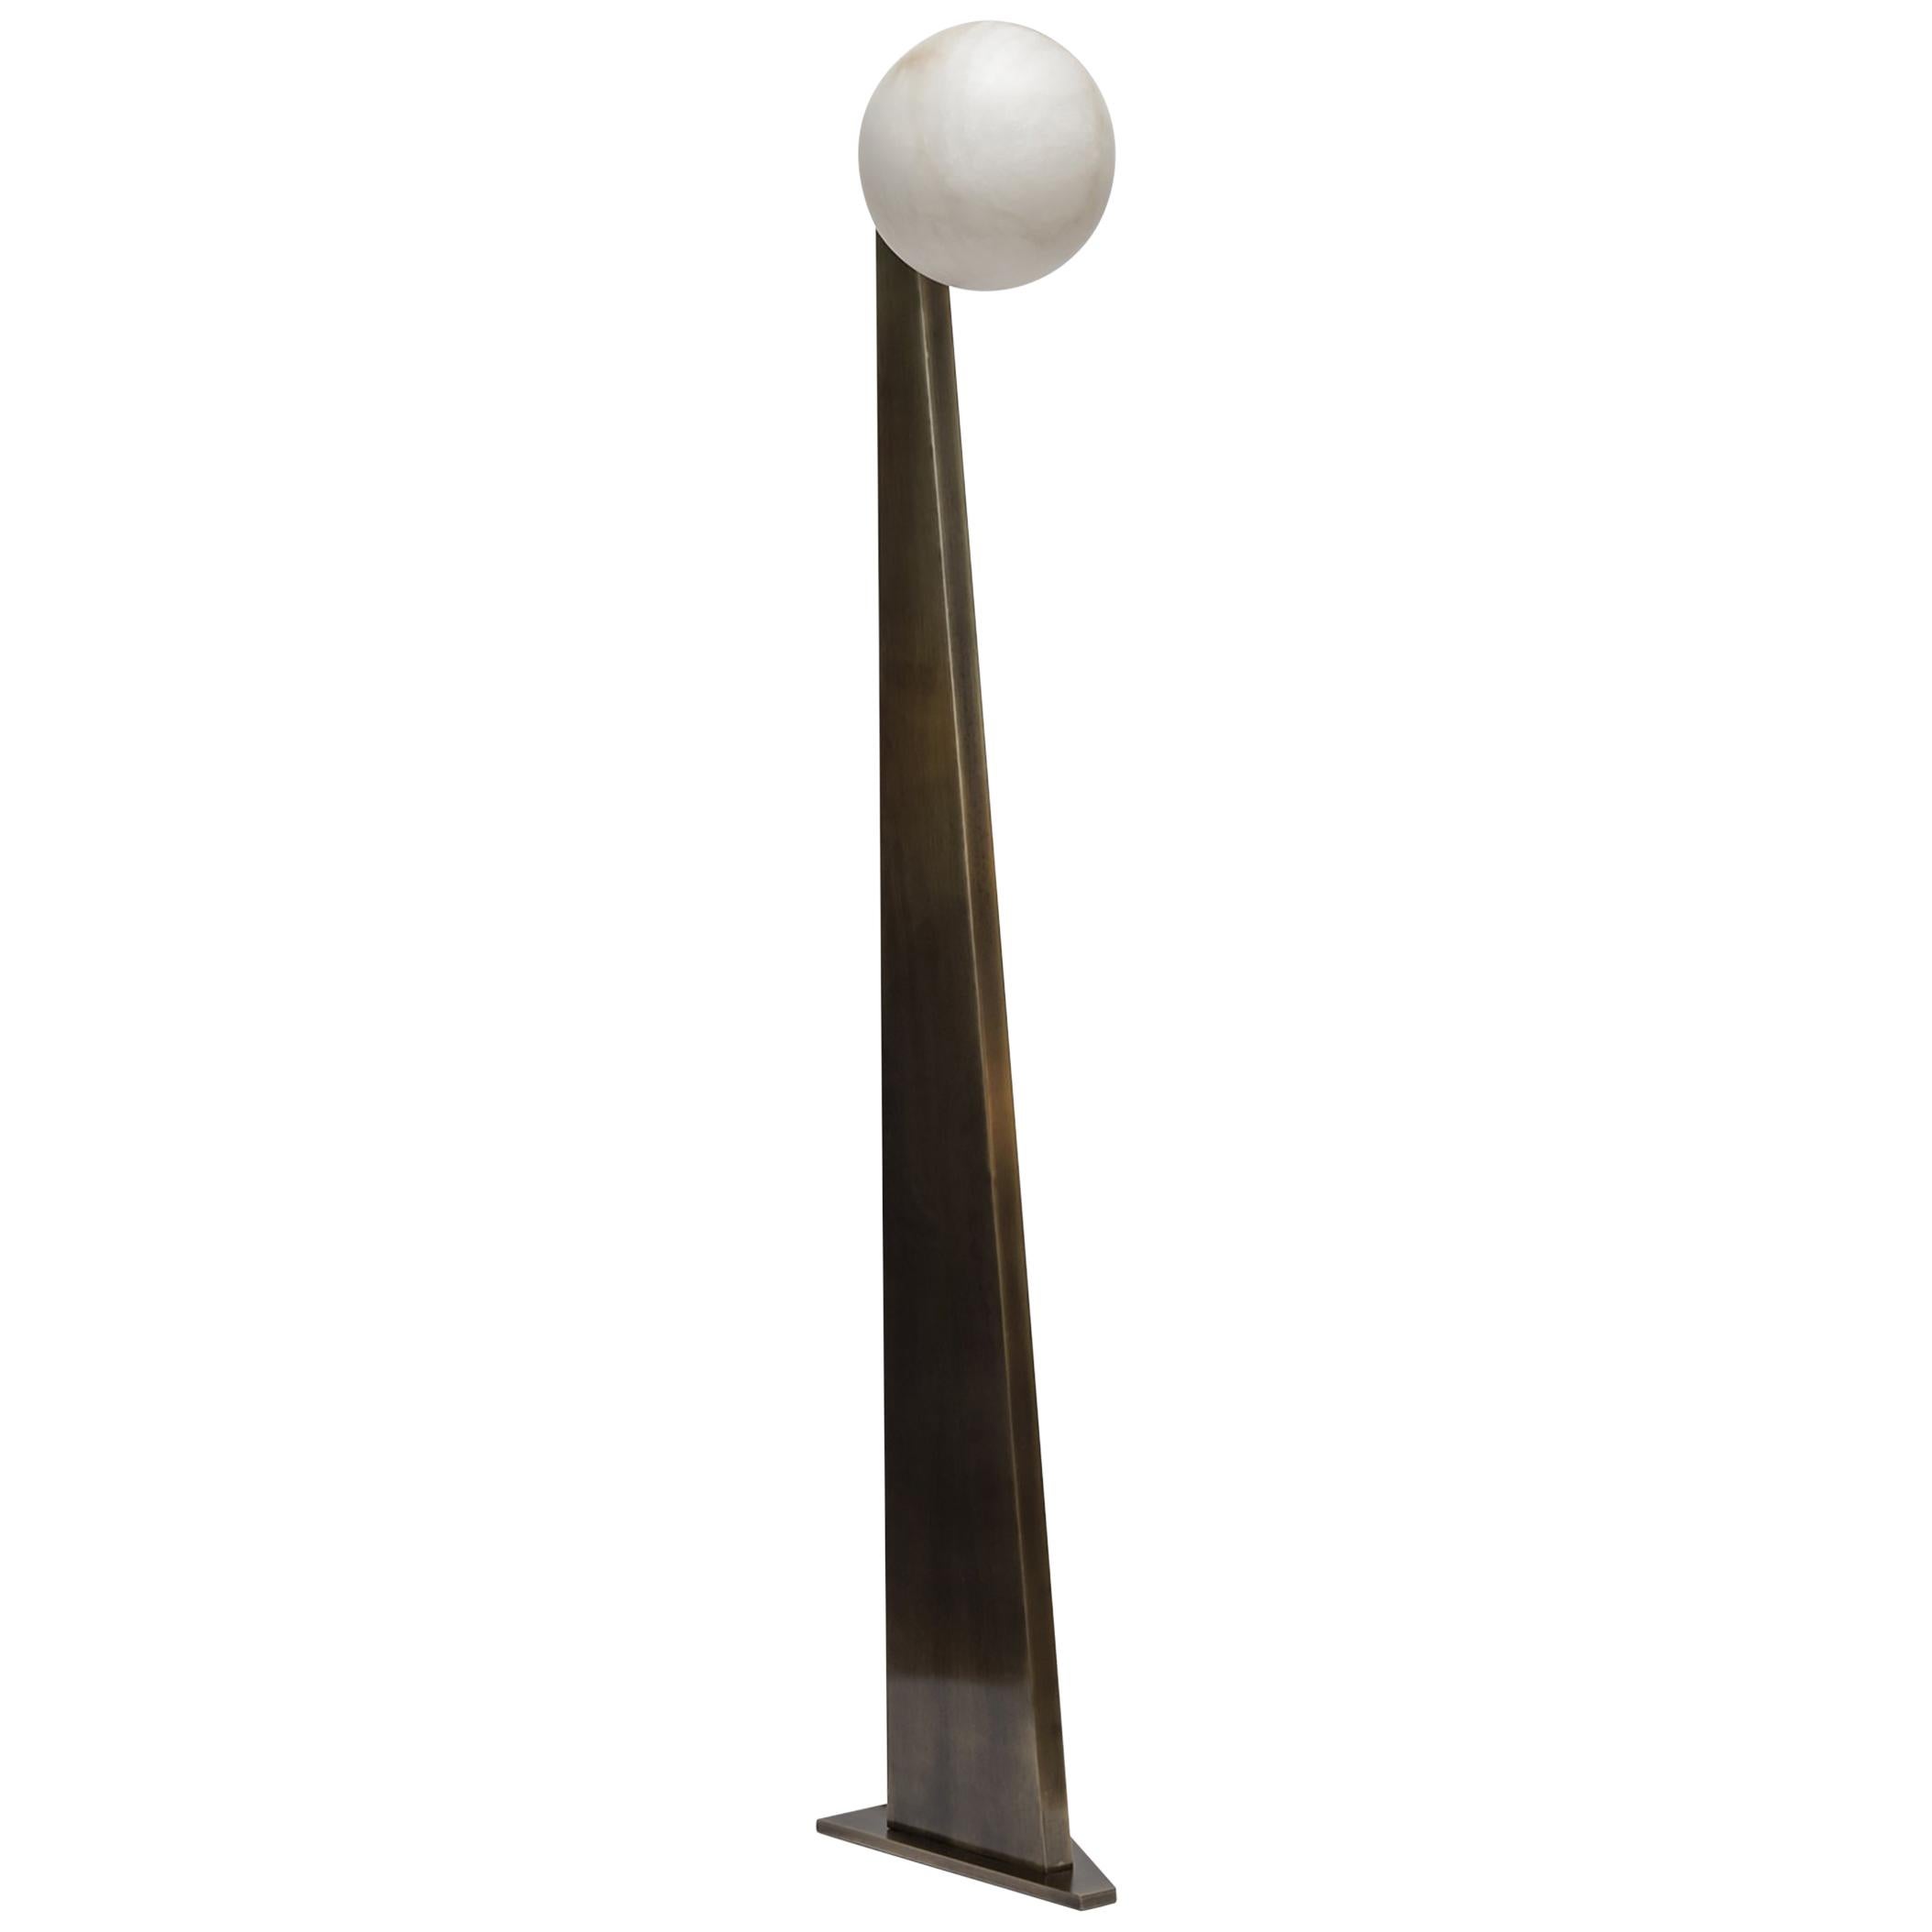 Glustin Luminaires Creation Floor Lamp in Brass with Alabaster Globe For Sale